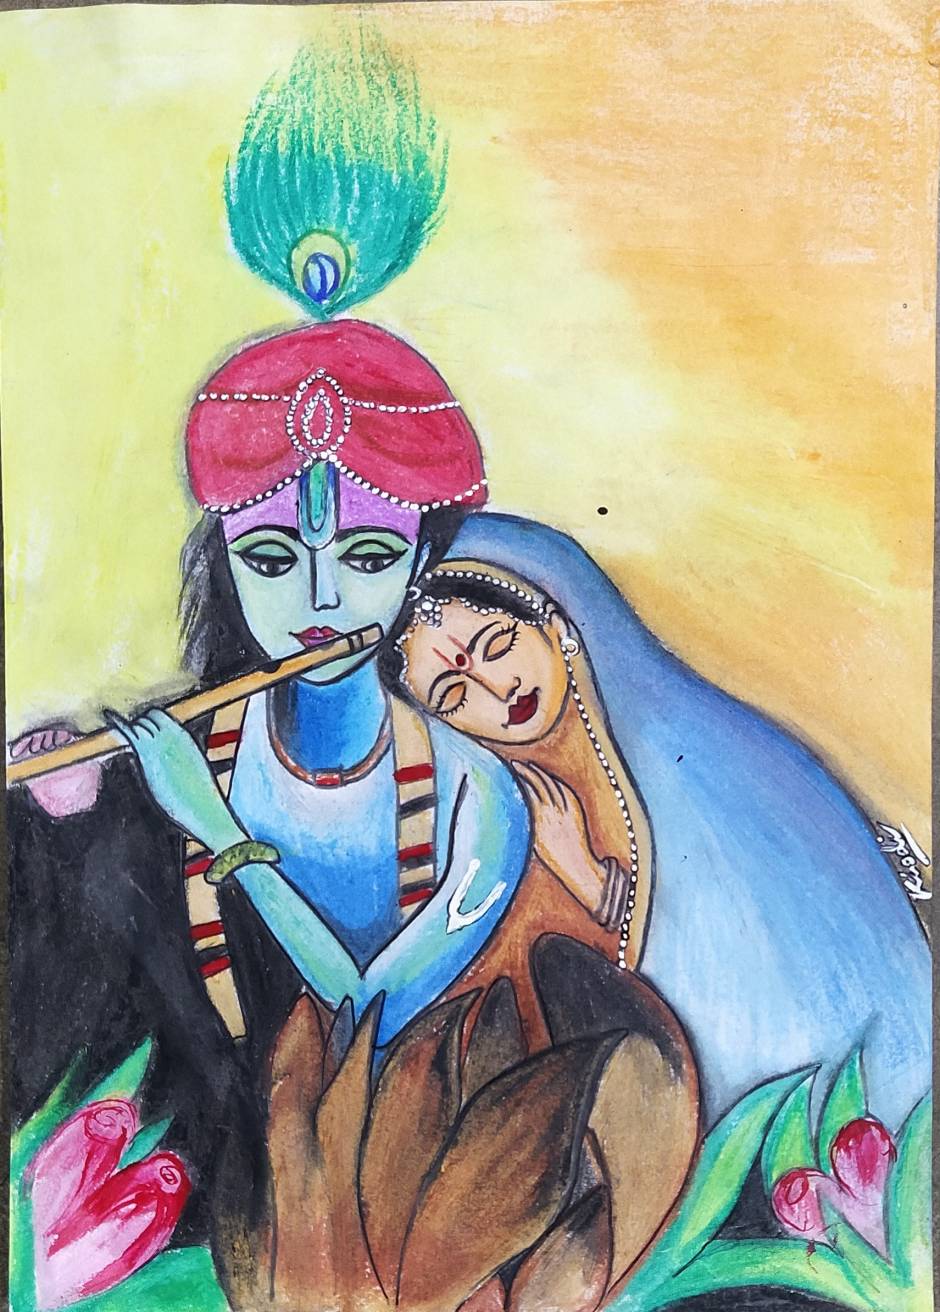 Buy Krishna Handmade Painting by SATYAM VALECHA. Code:ART_8536_66328 -  Paintings for Sale online in India.